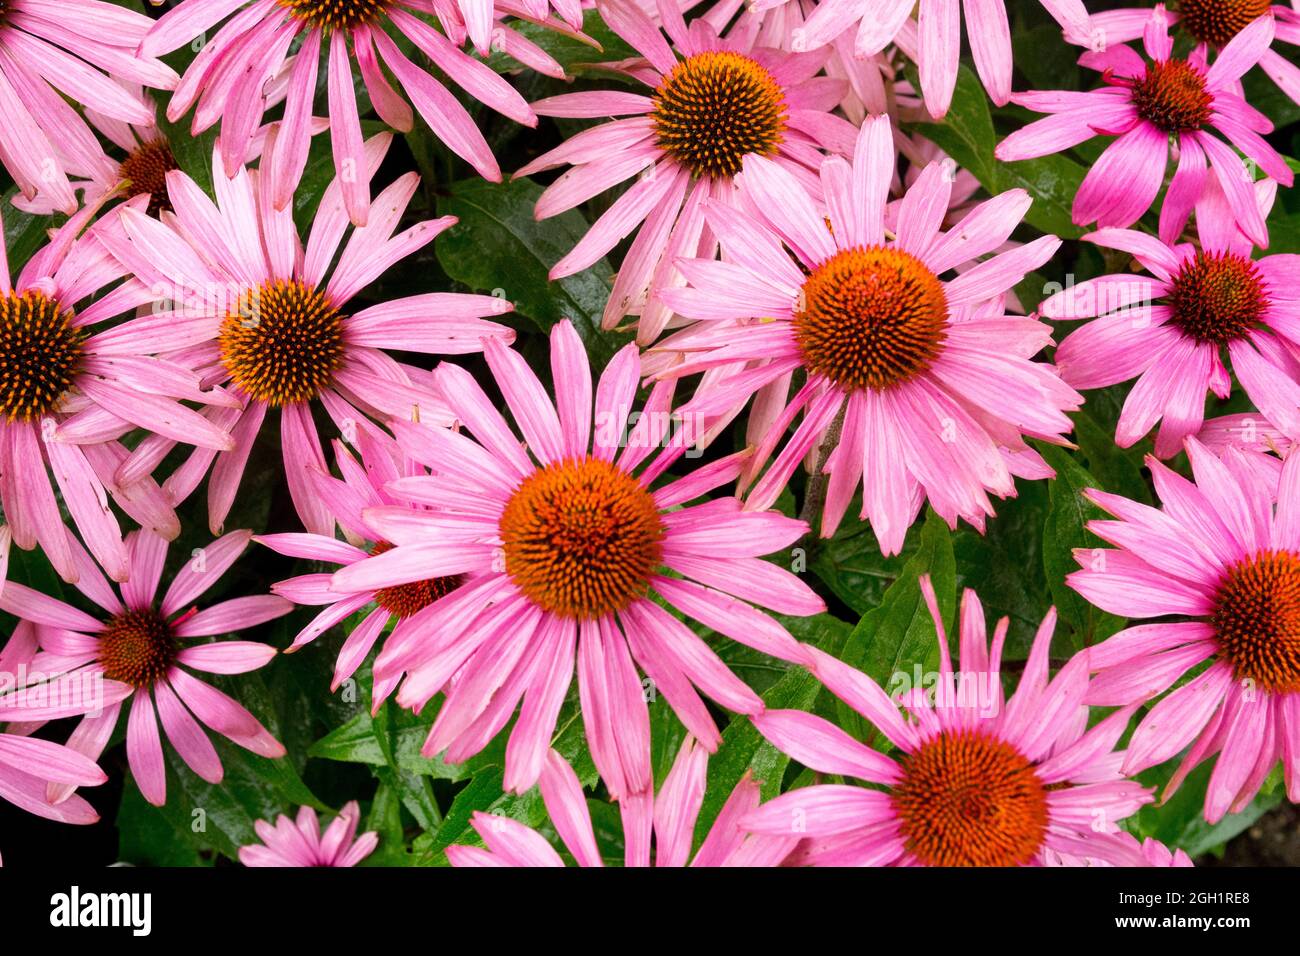 Leuchtend rosa Kegelblumen Blume Echinacea purpurea 'Feeling Pink' Stockfoto